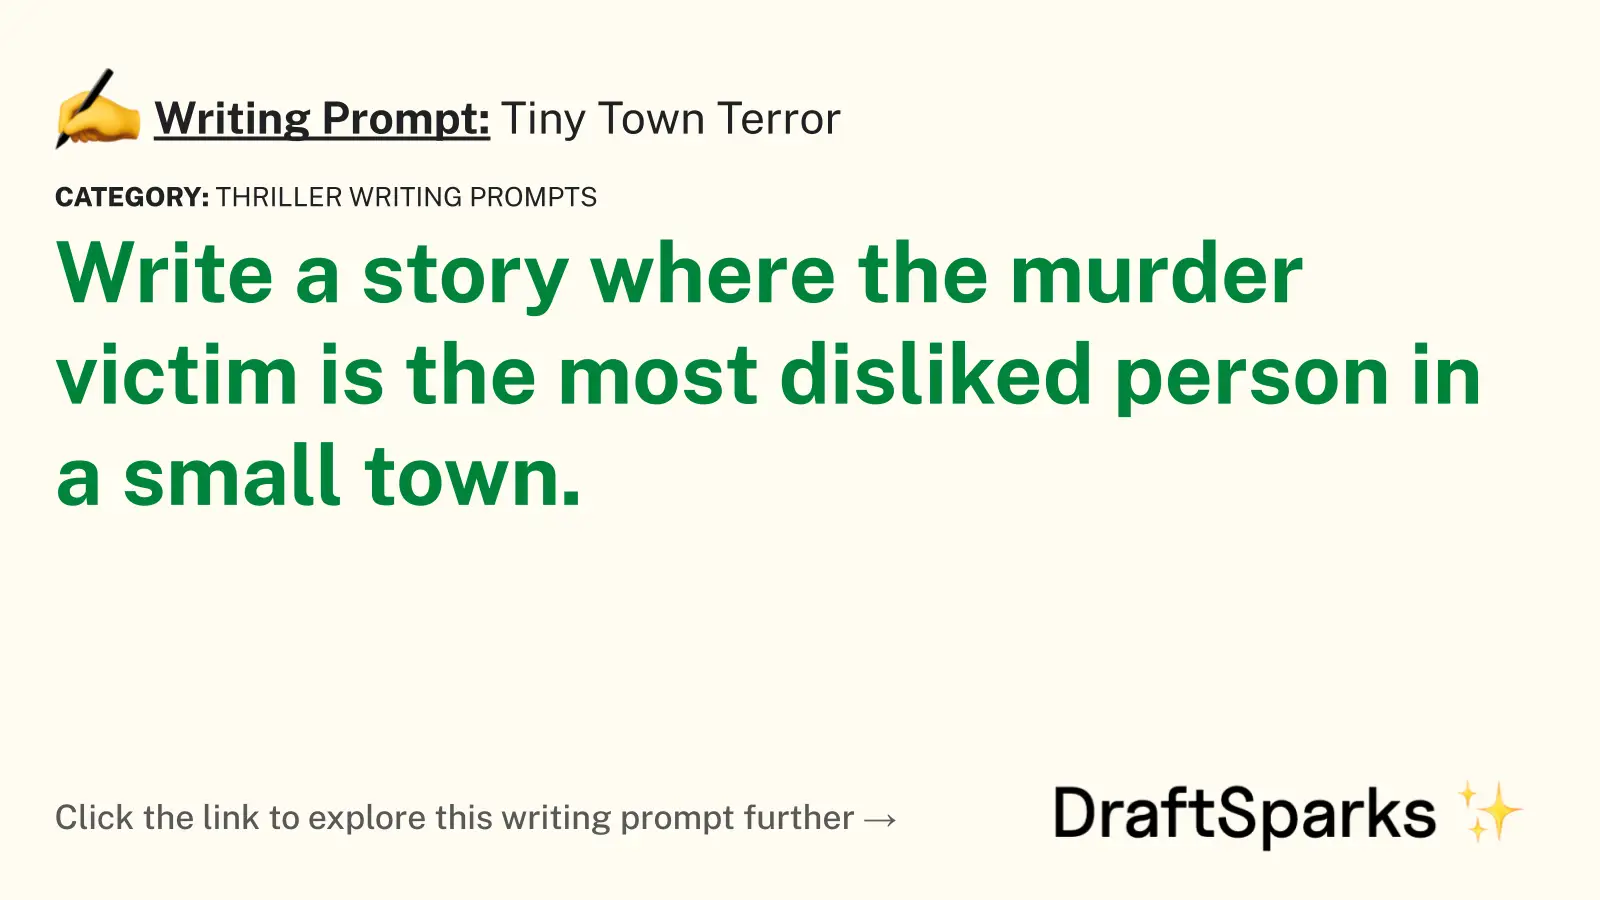 Tiny Town Terror